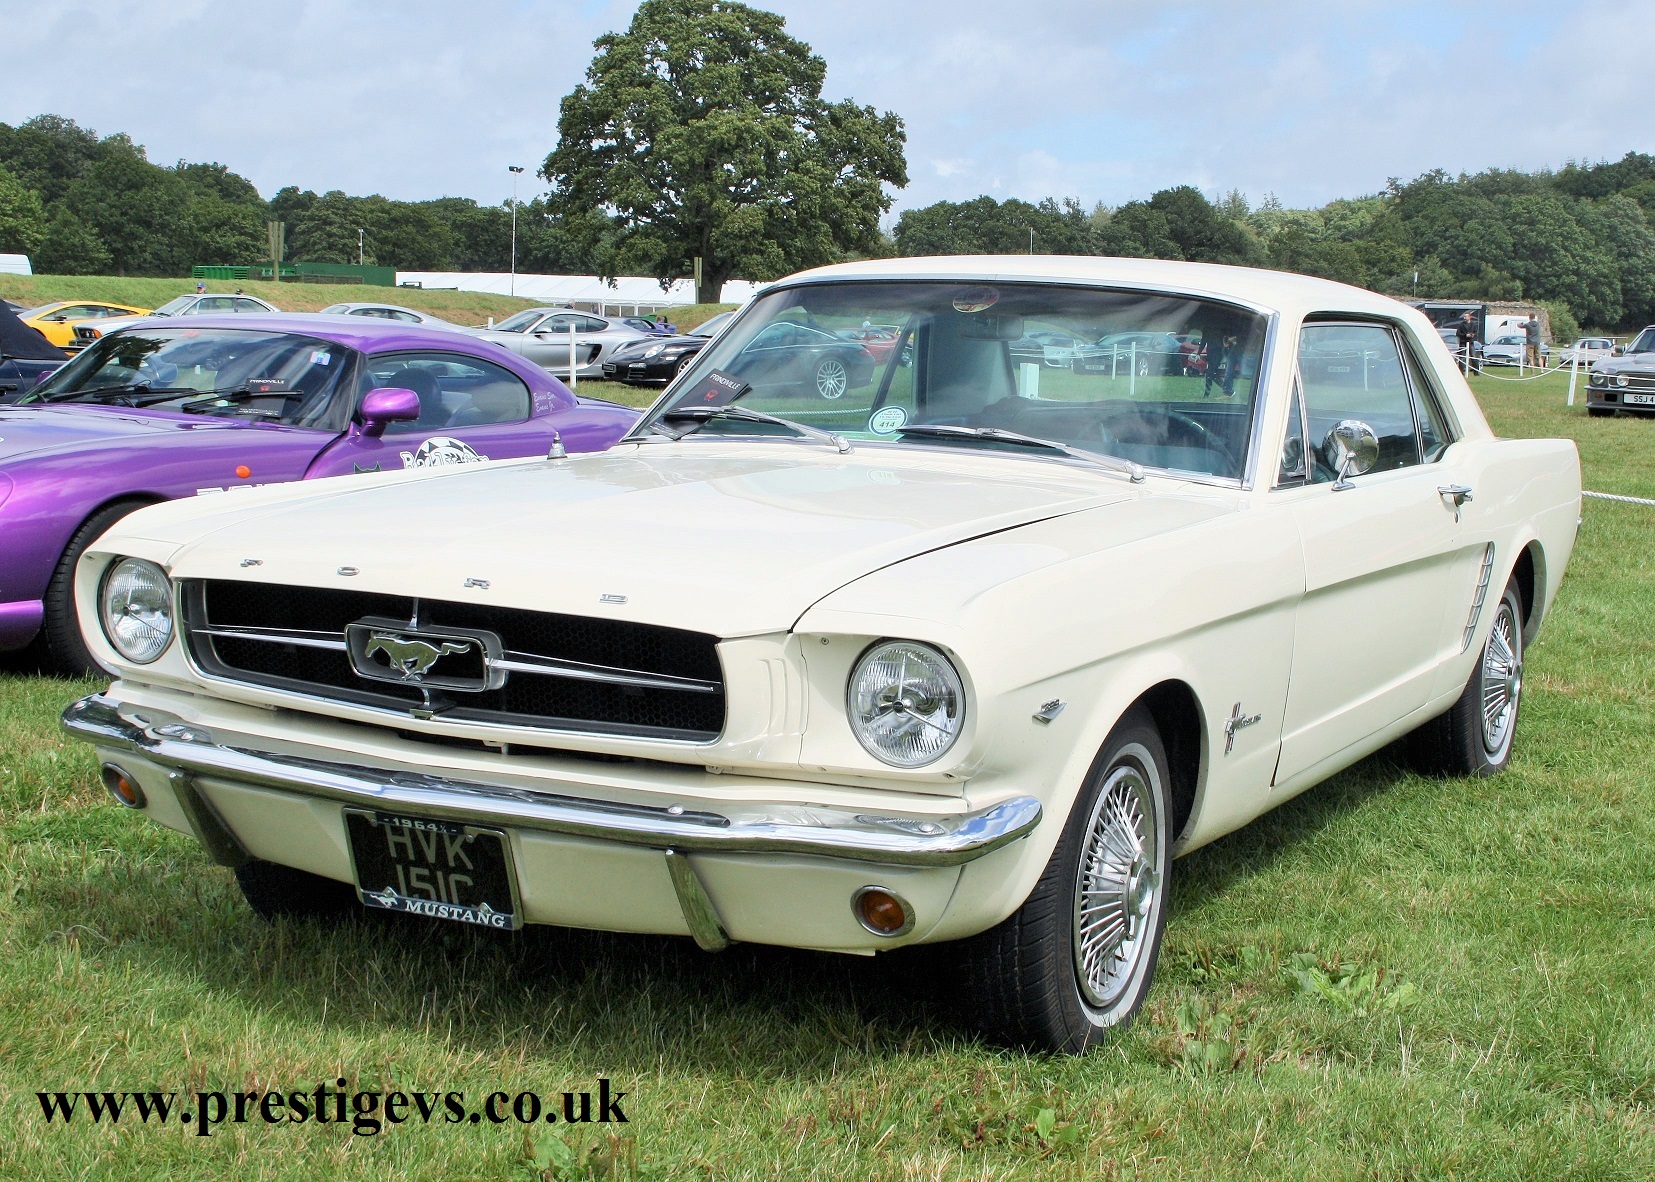 Ford Mustang Prestigevs.co.uk